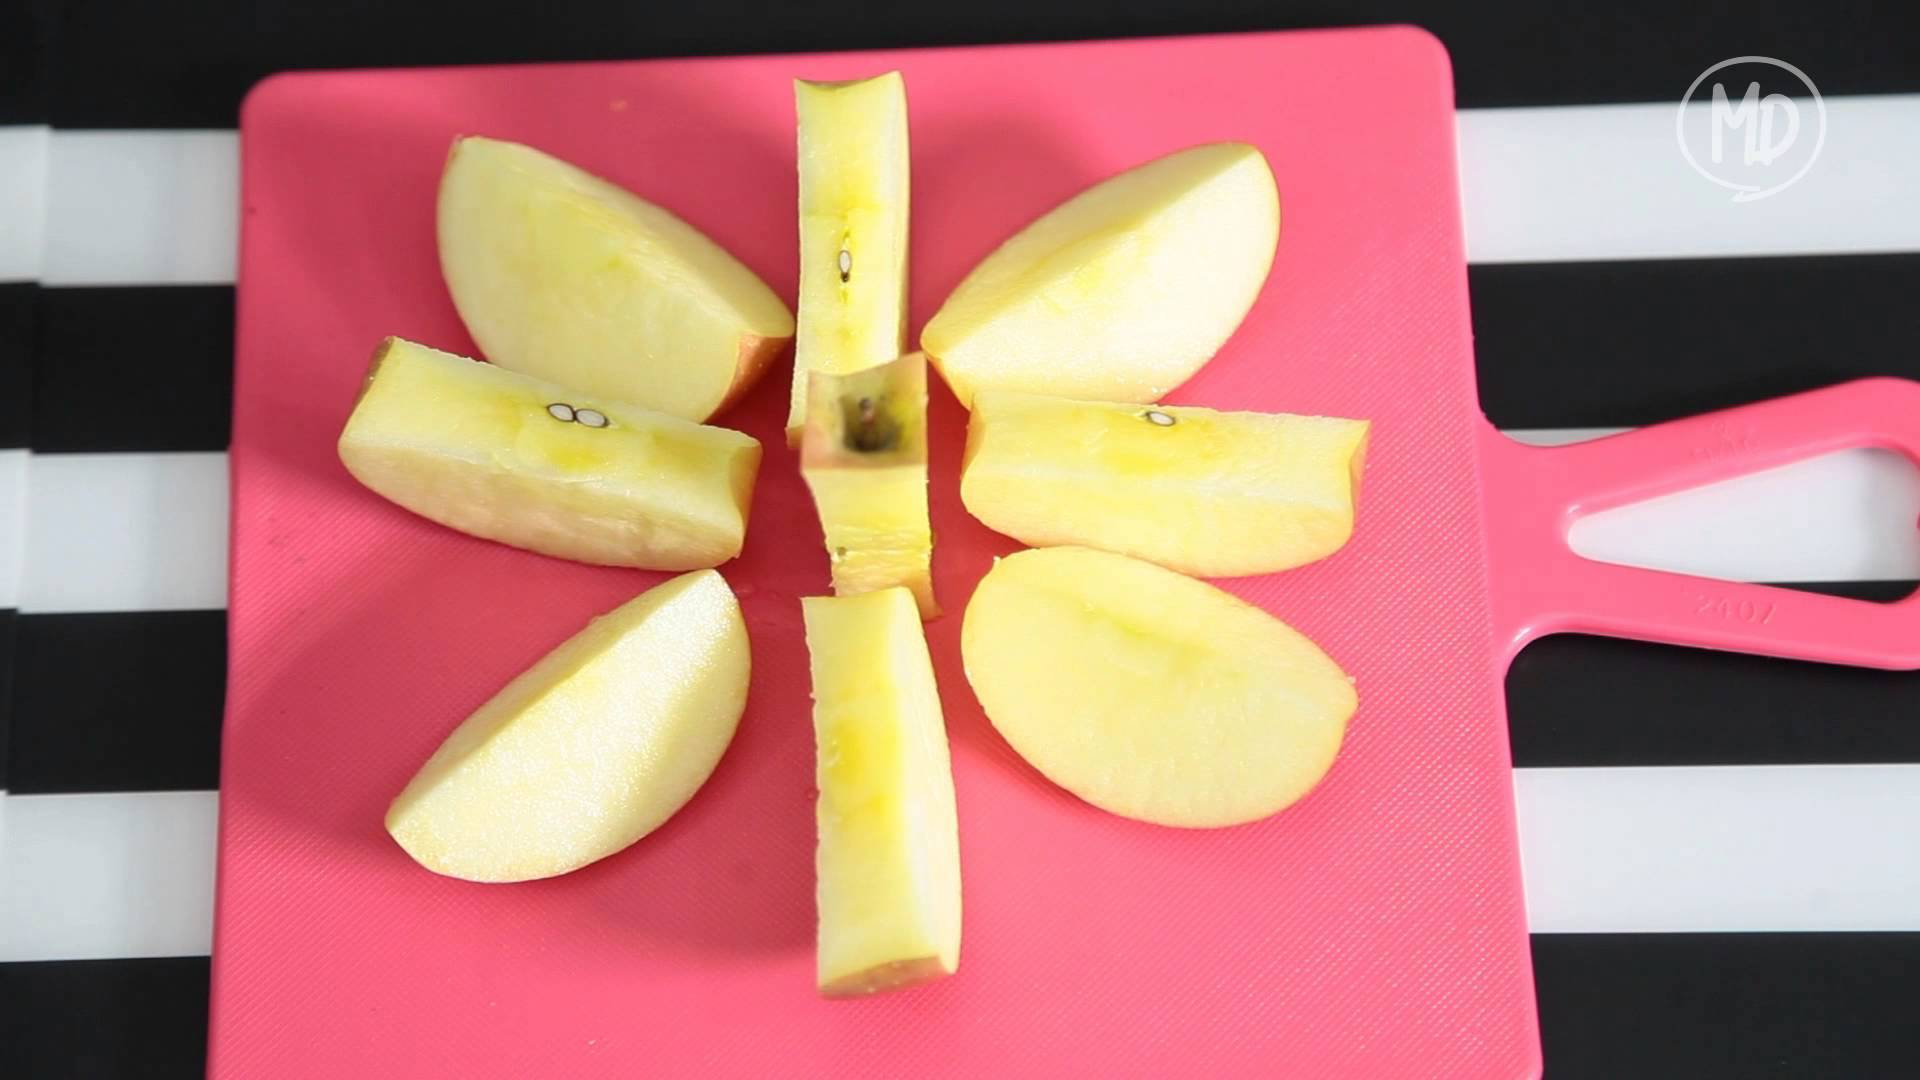 How to Cut an Apple